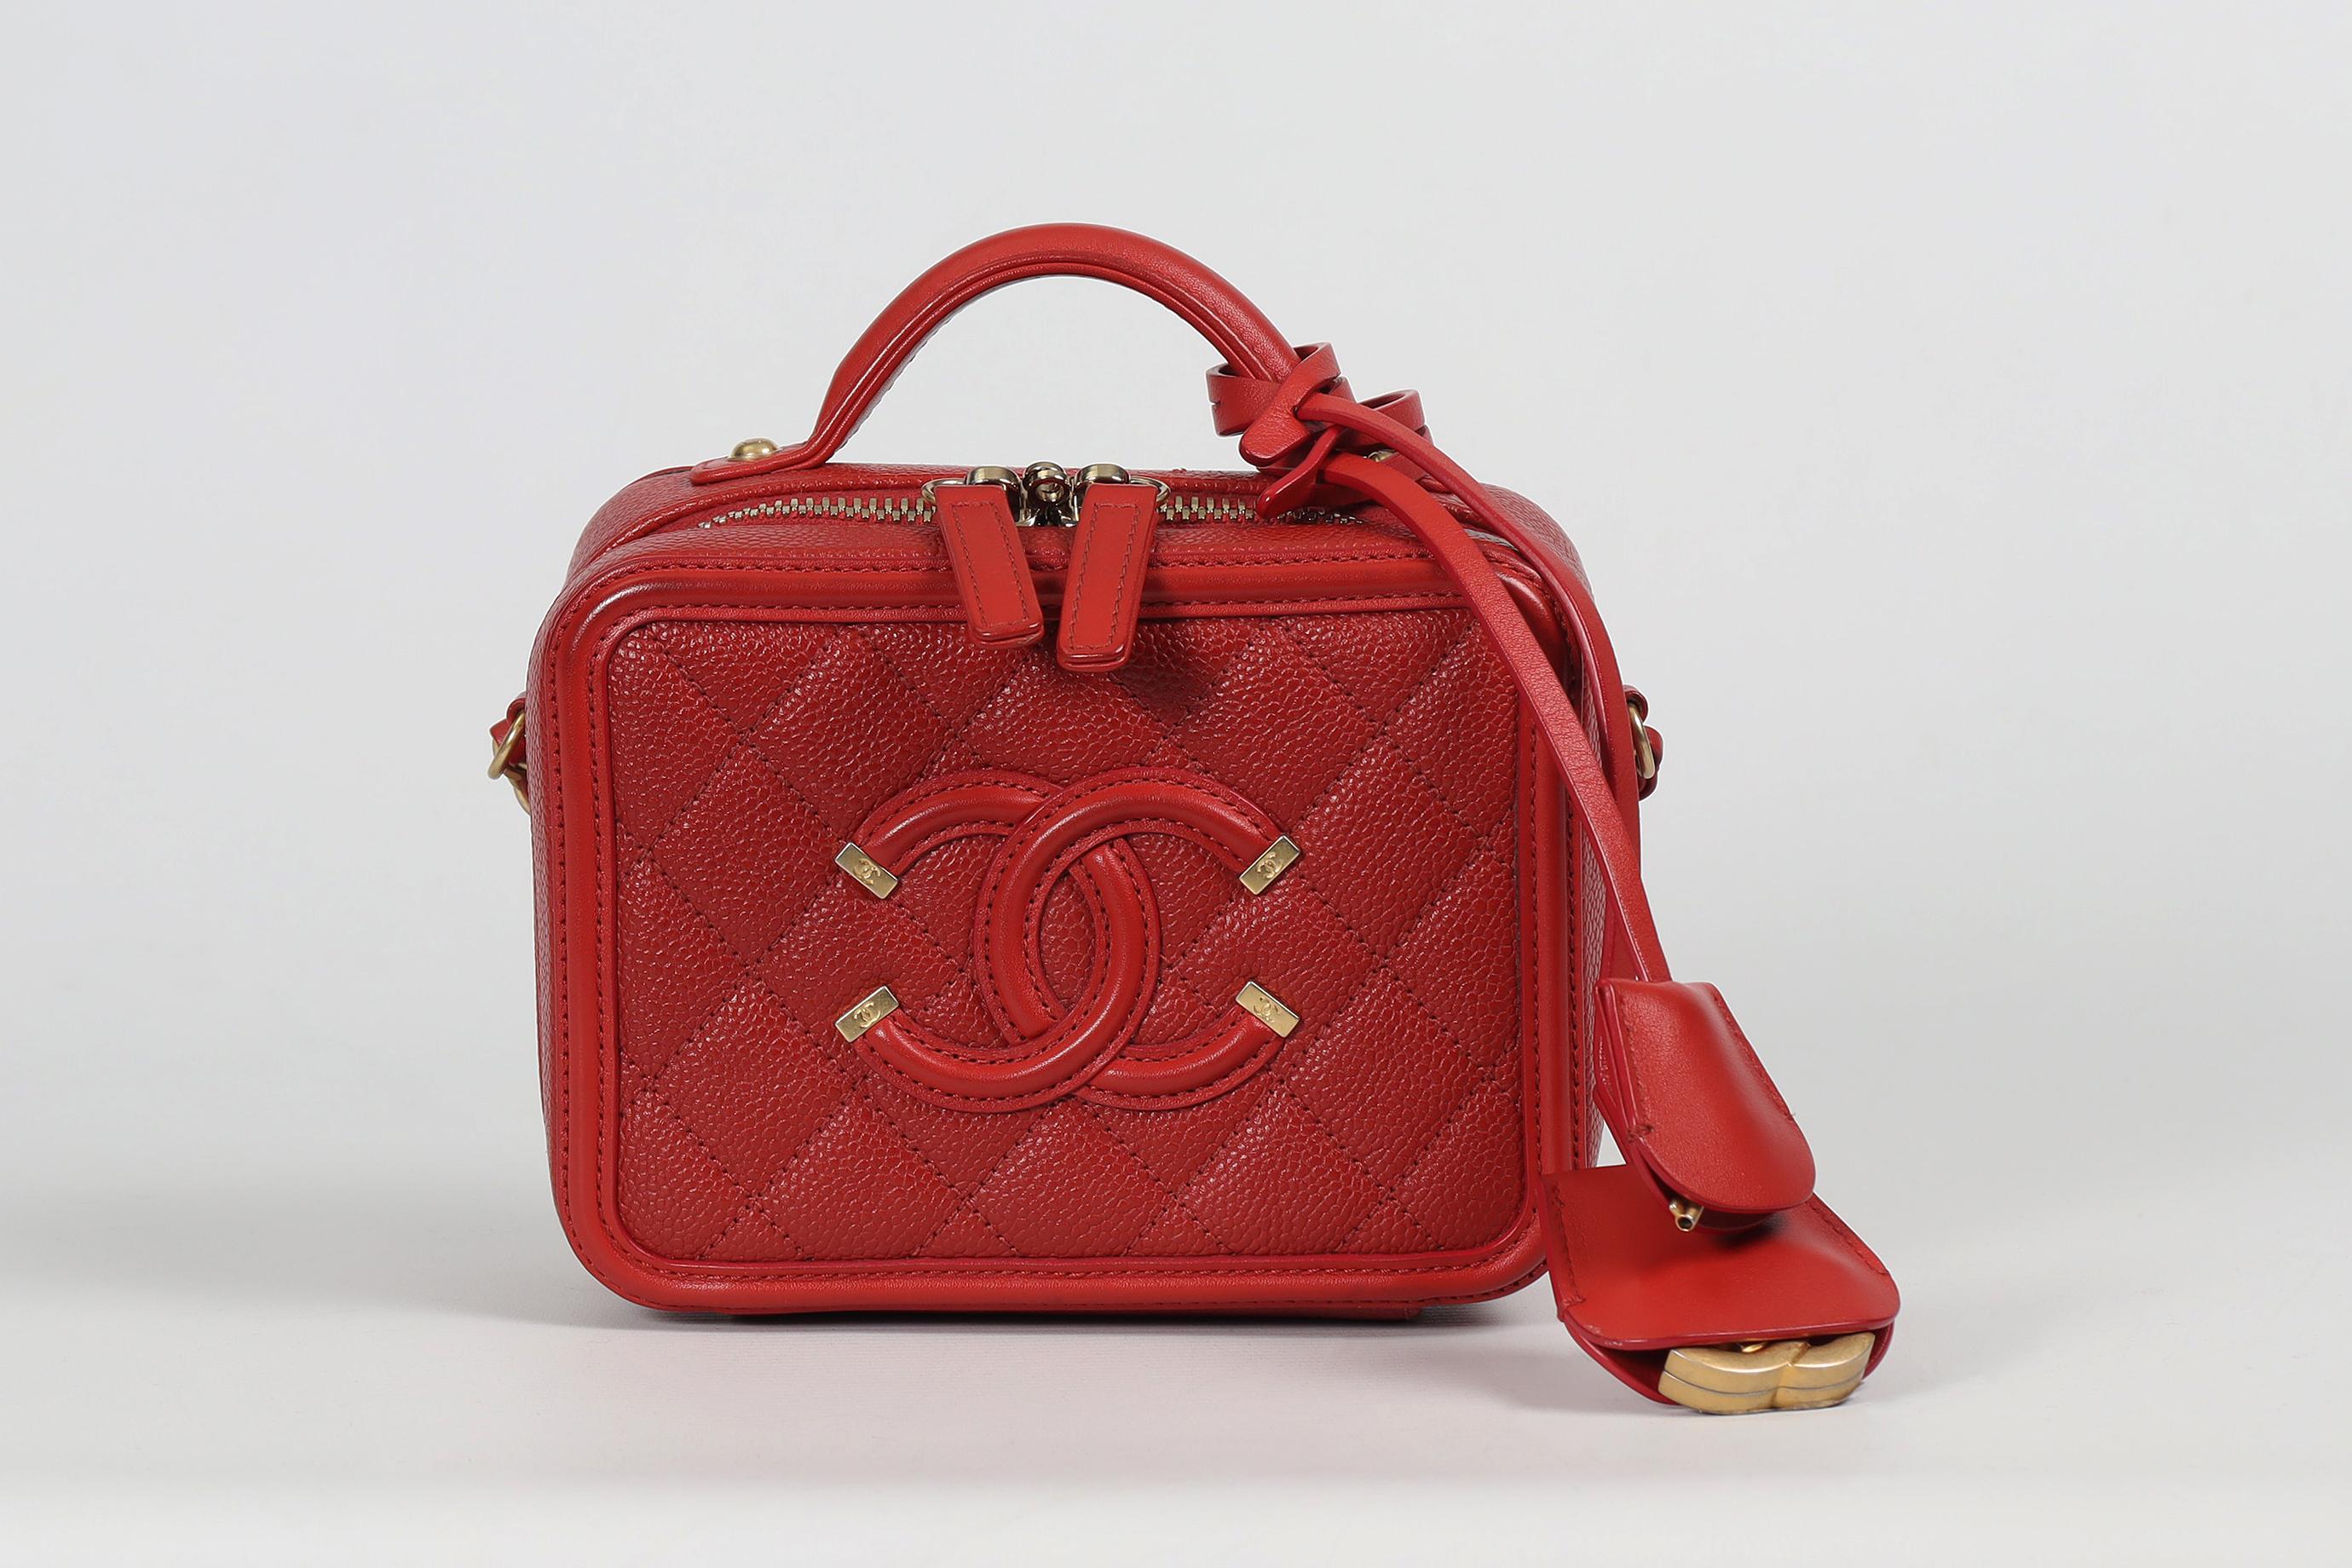 <ul>
<li>Chanel 2019 Vanity Case Small Quilted Caviar Leather Shoulder Bag.</li>
<li>Red.</li>
<li>Zip fastening - Top.</li>
<li>Comes with - dustbag and authenticity card.</li>
<li><strong>Model: Vanity.</strong></li>
<li><strong>Height: 4.7